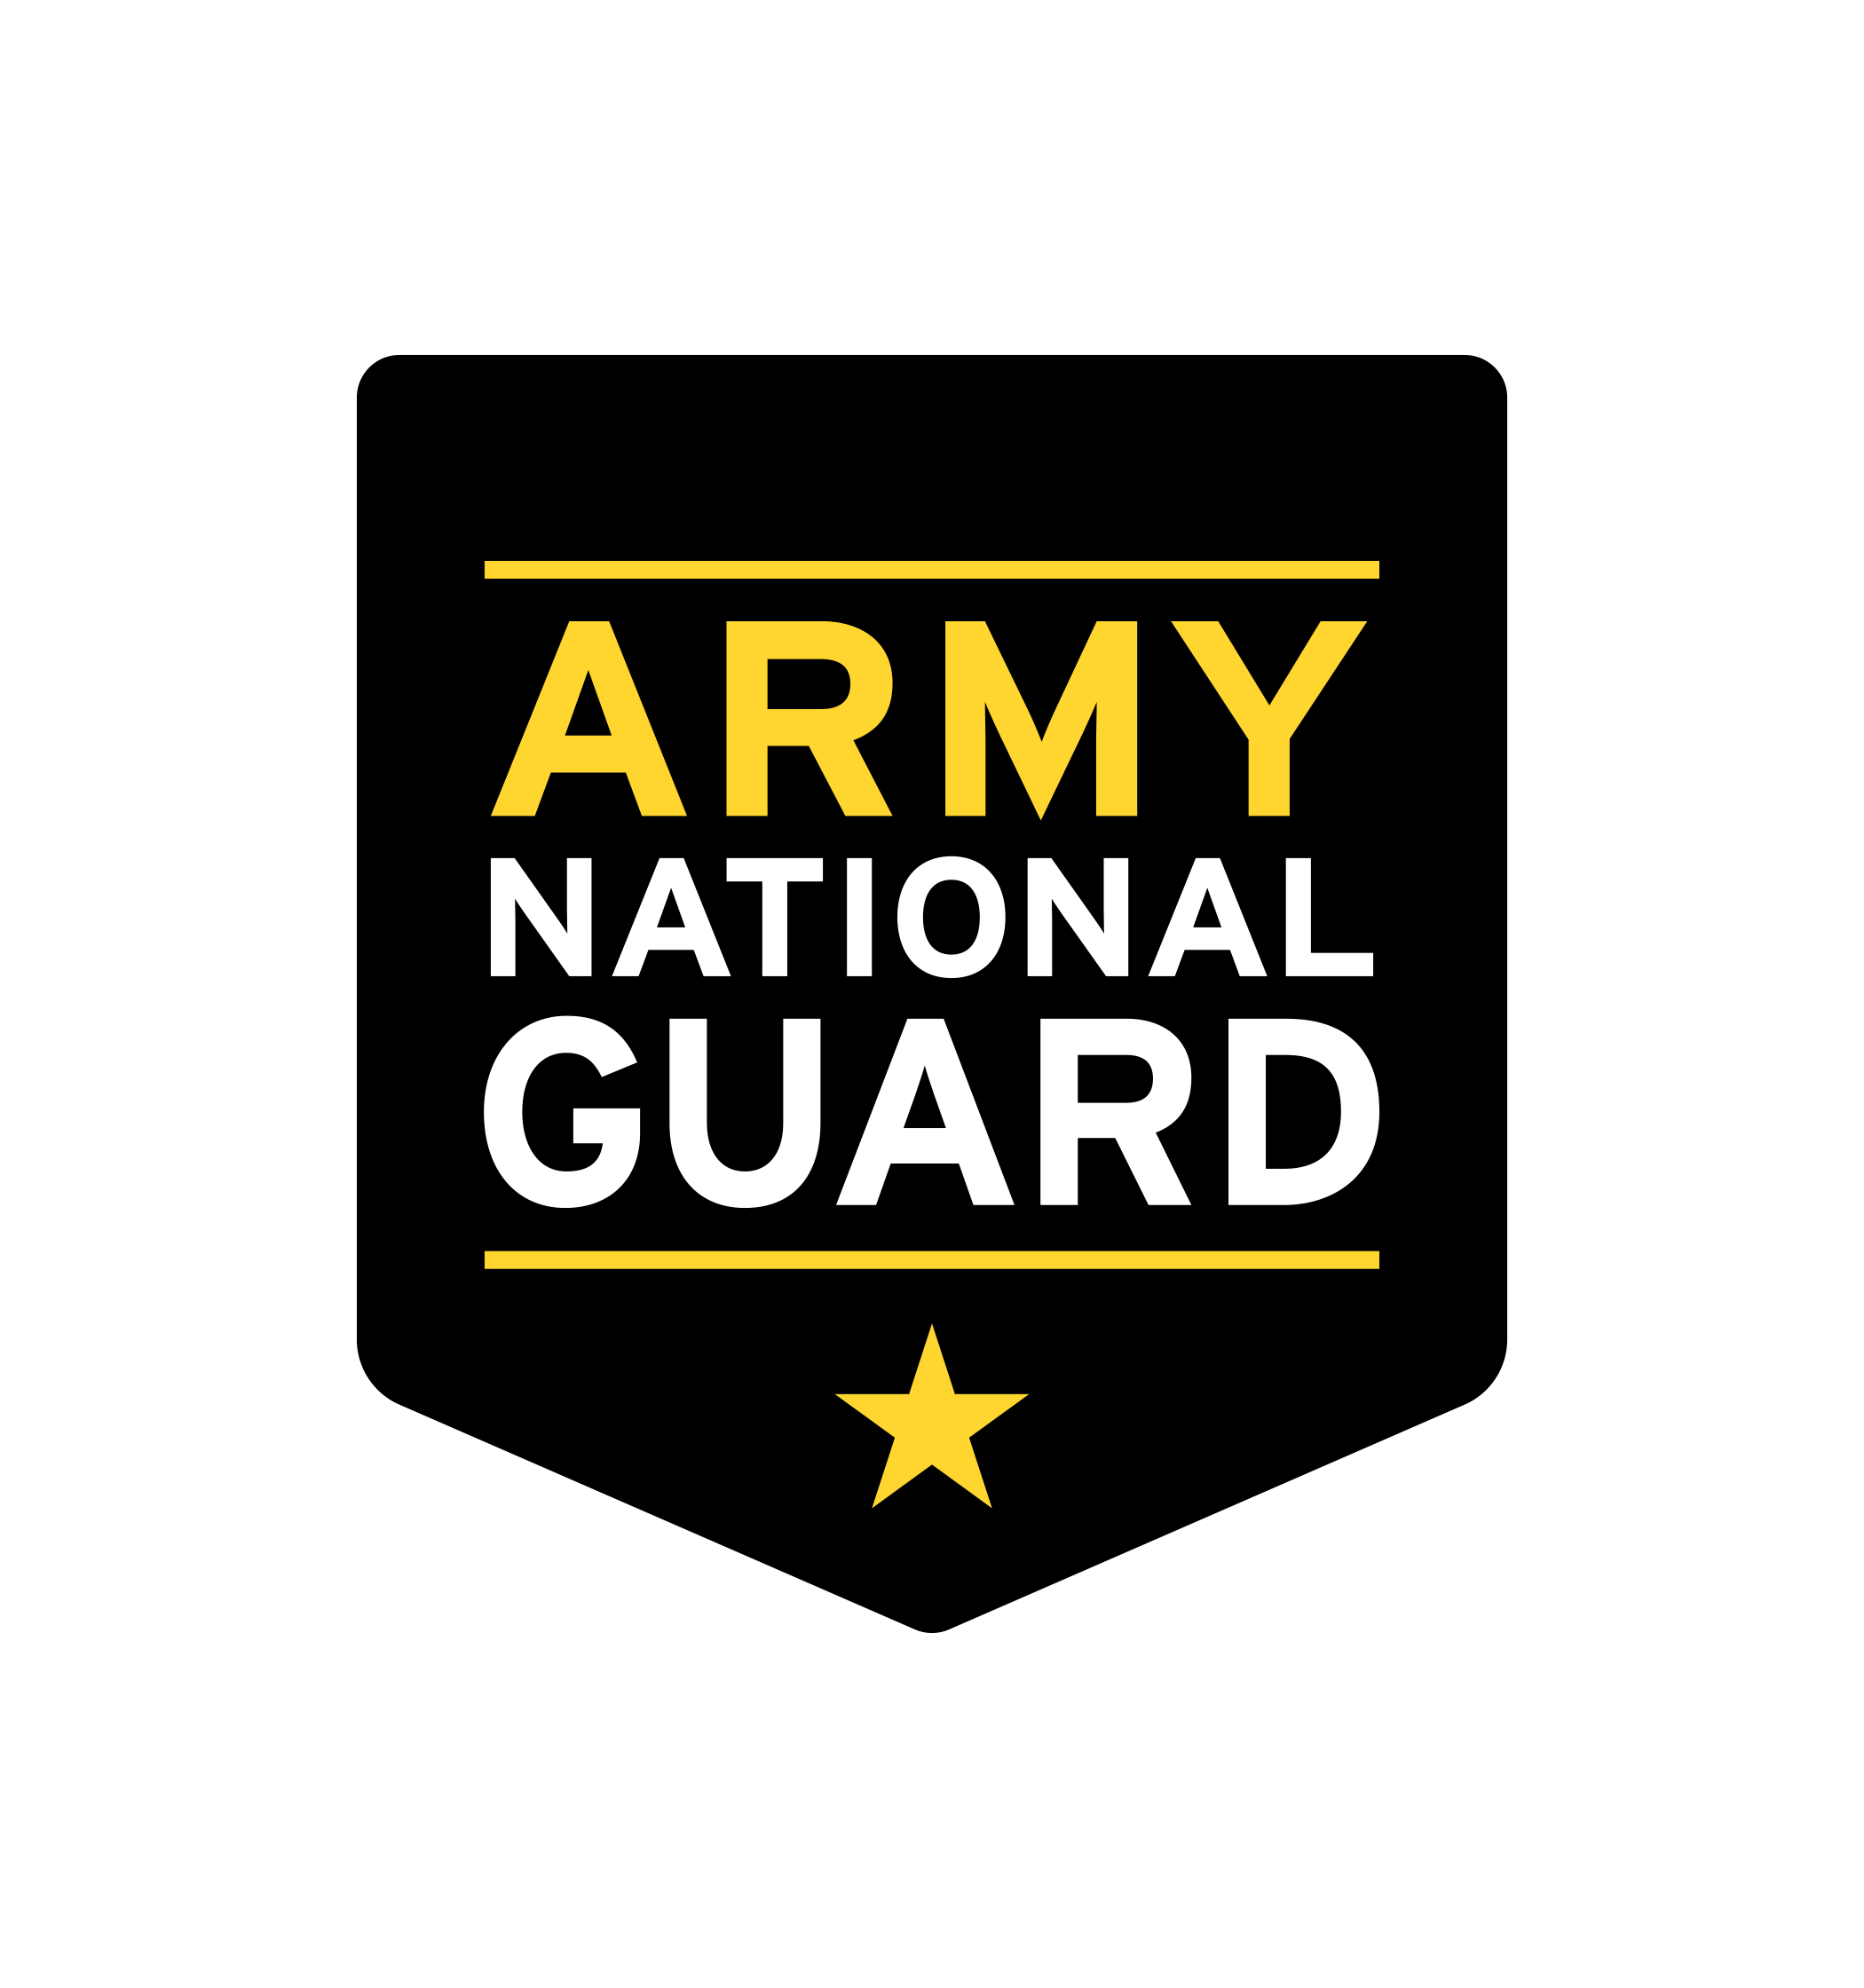 National Logo - army national guard logo png - AbeonCliparts | Cliparts & Vectors